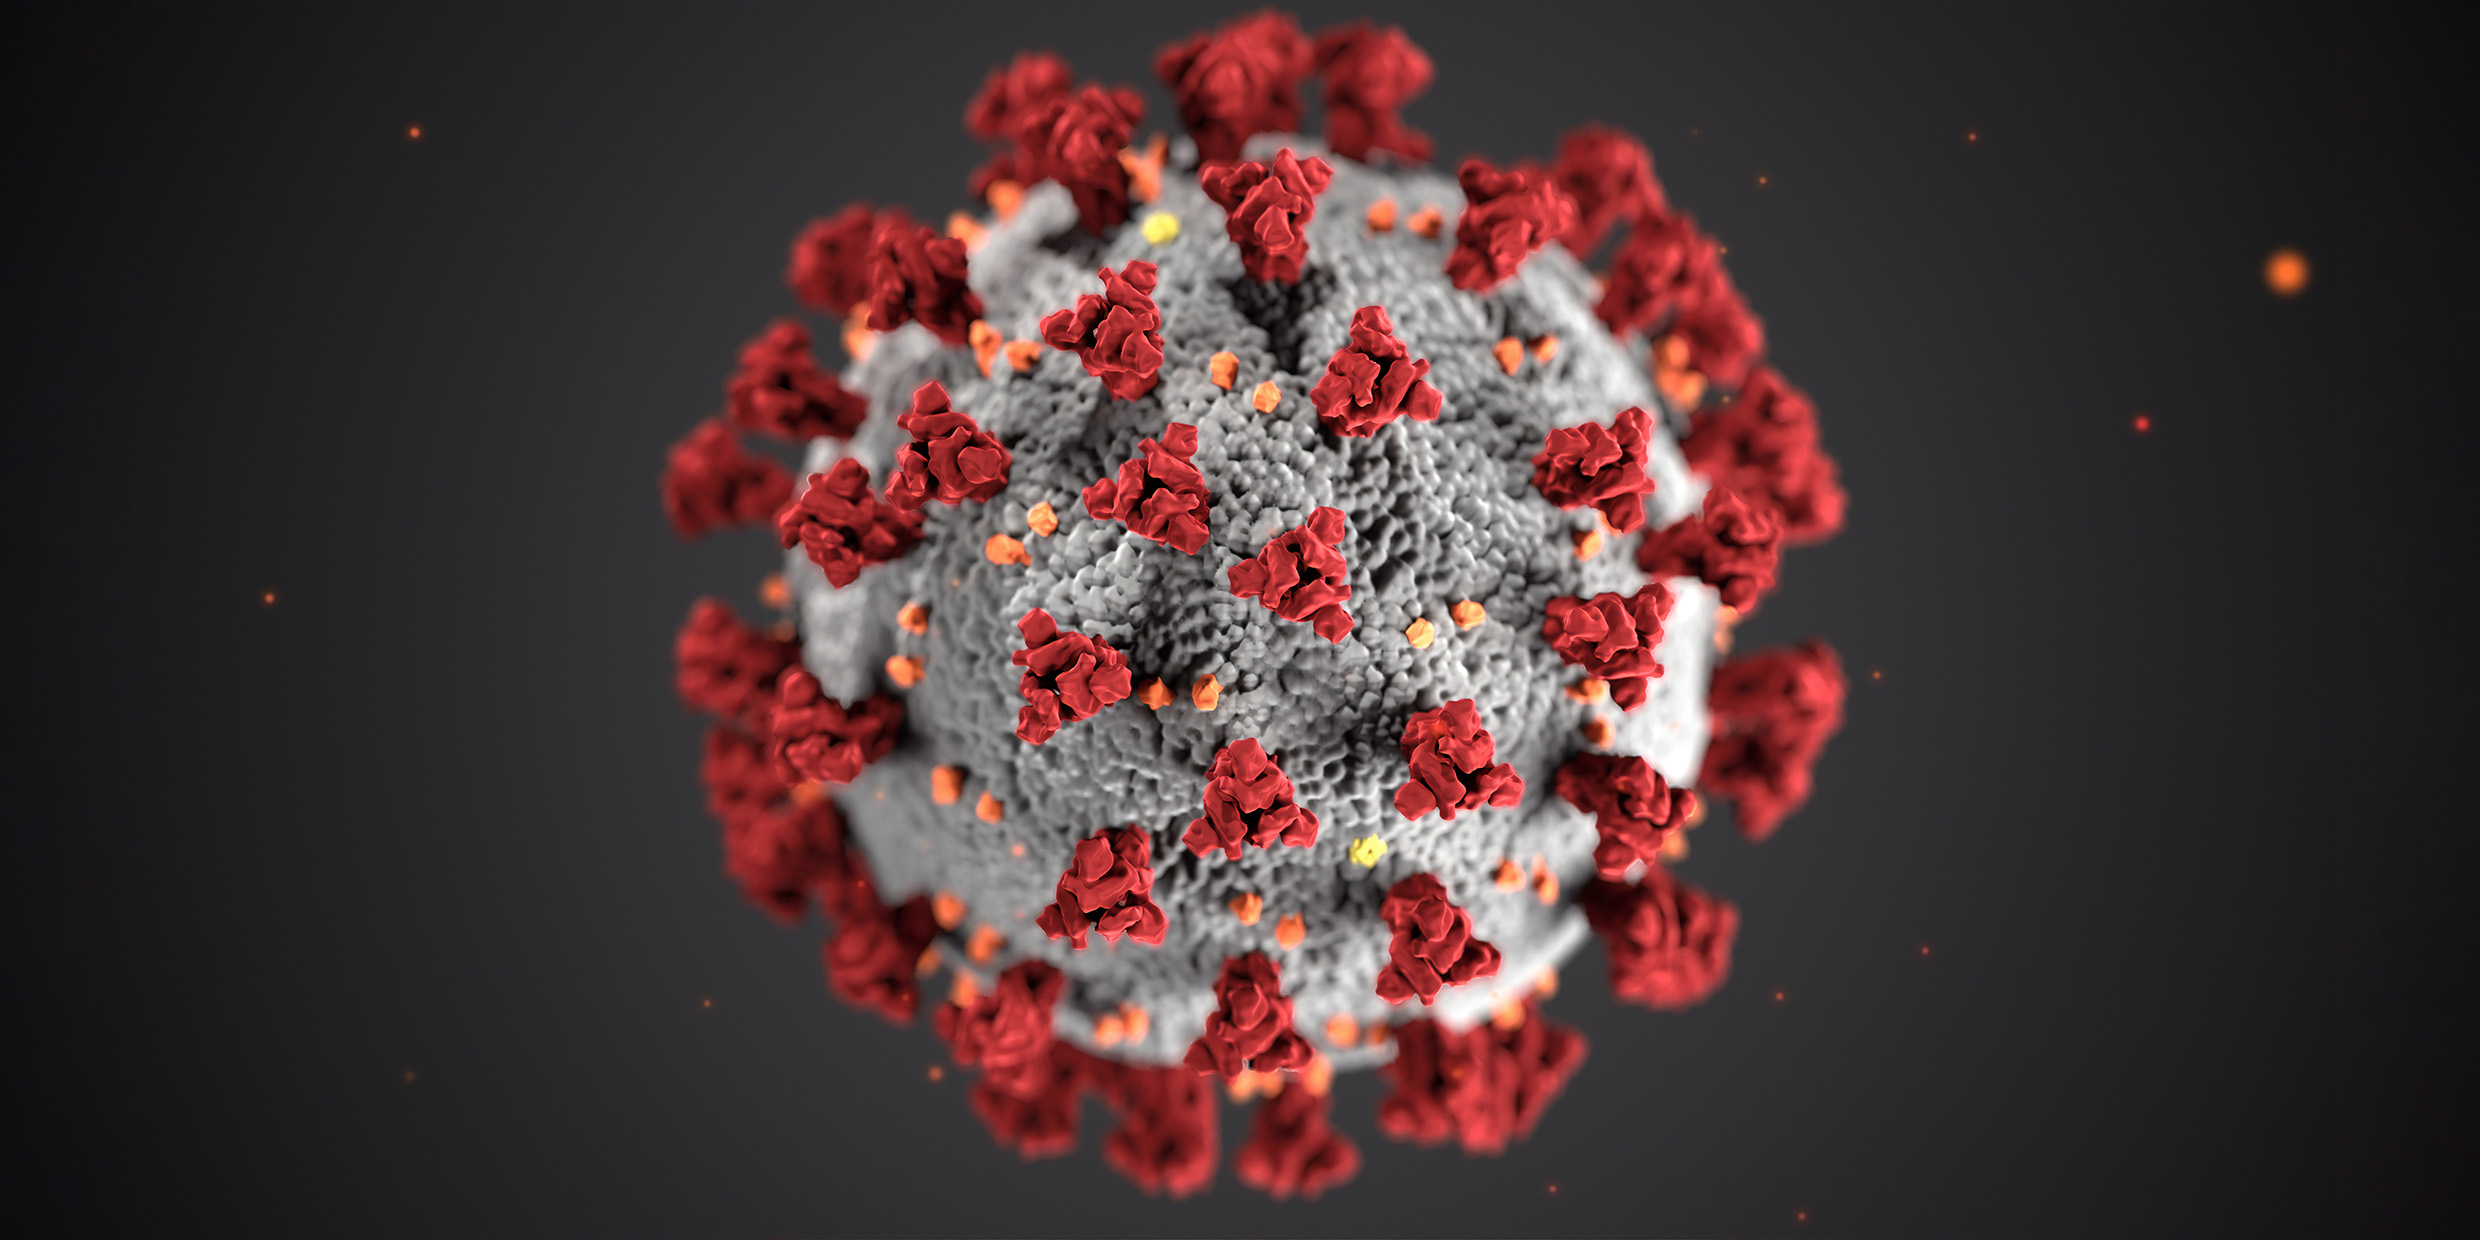 Artist's rendering of the COVID-19 virus